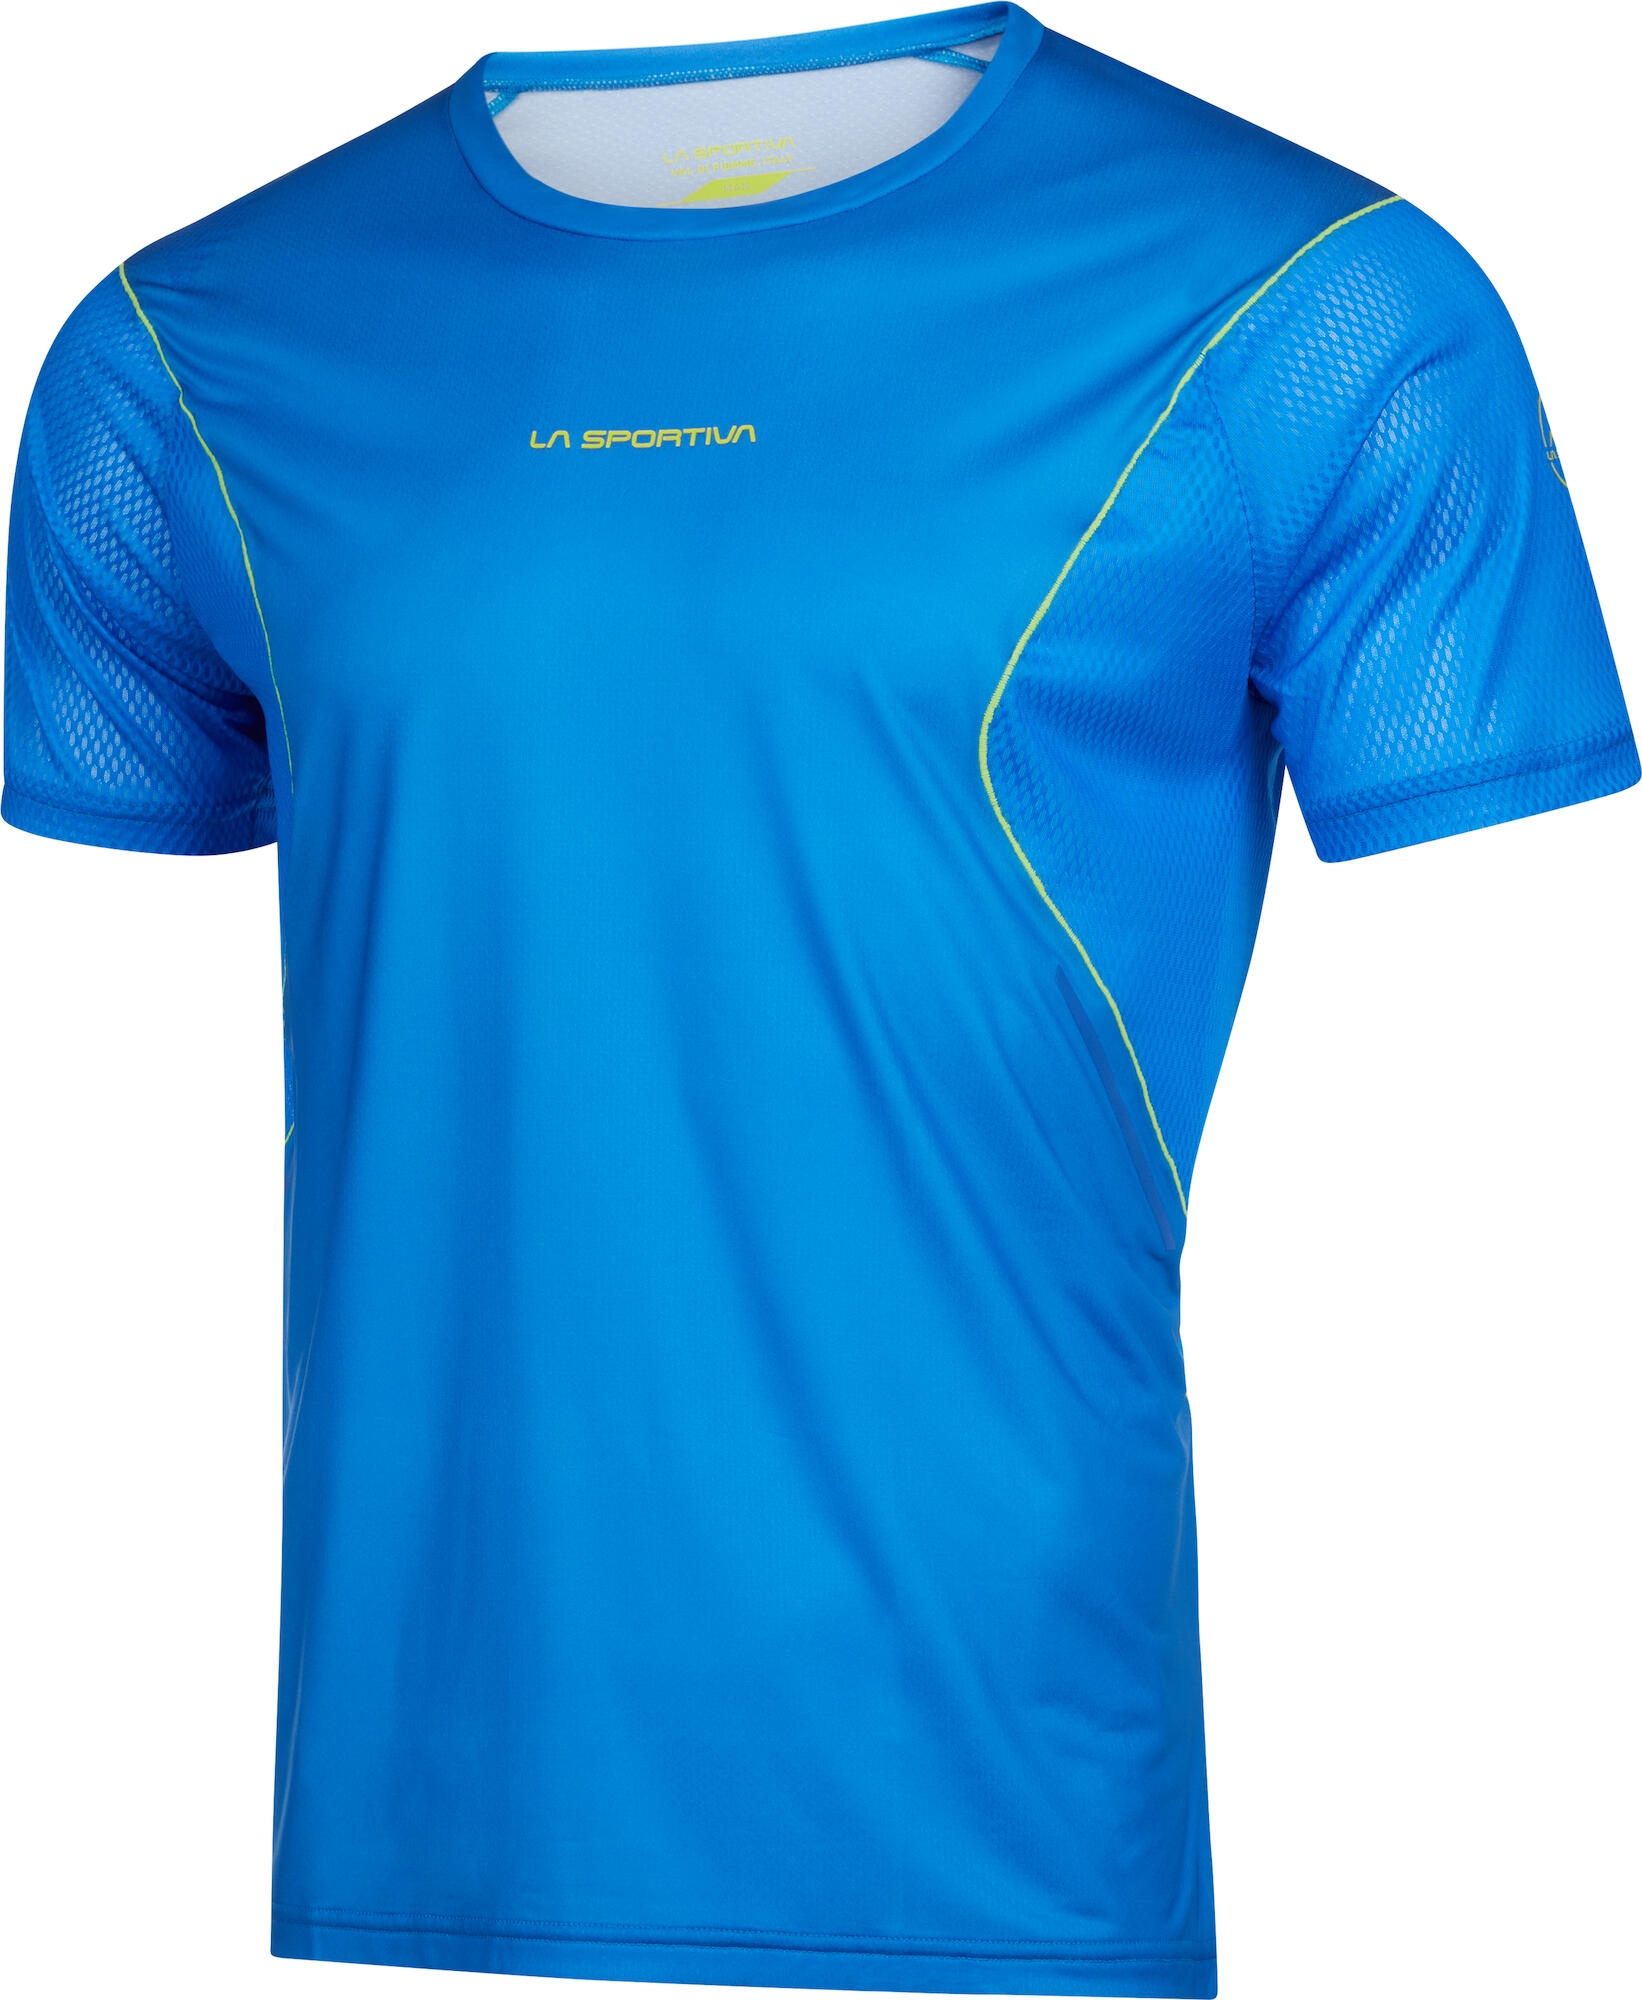 La Sportiva Resolute T-shirt Men electric blue (634634) L